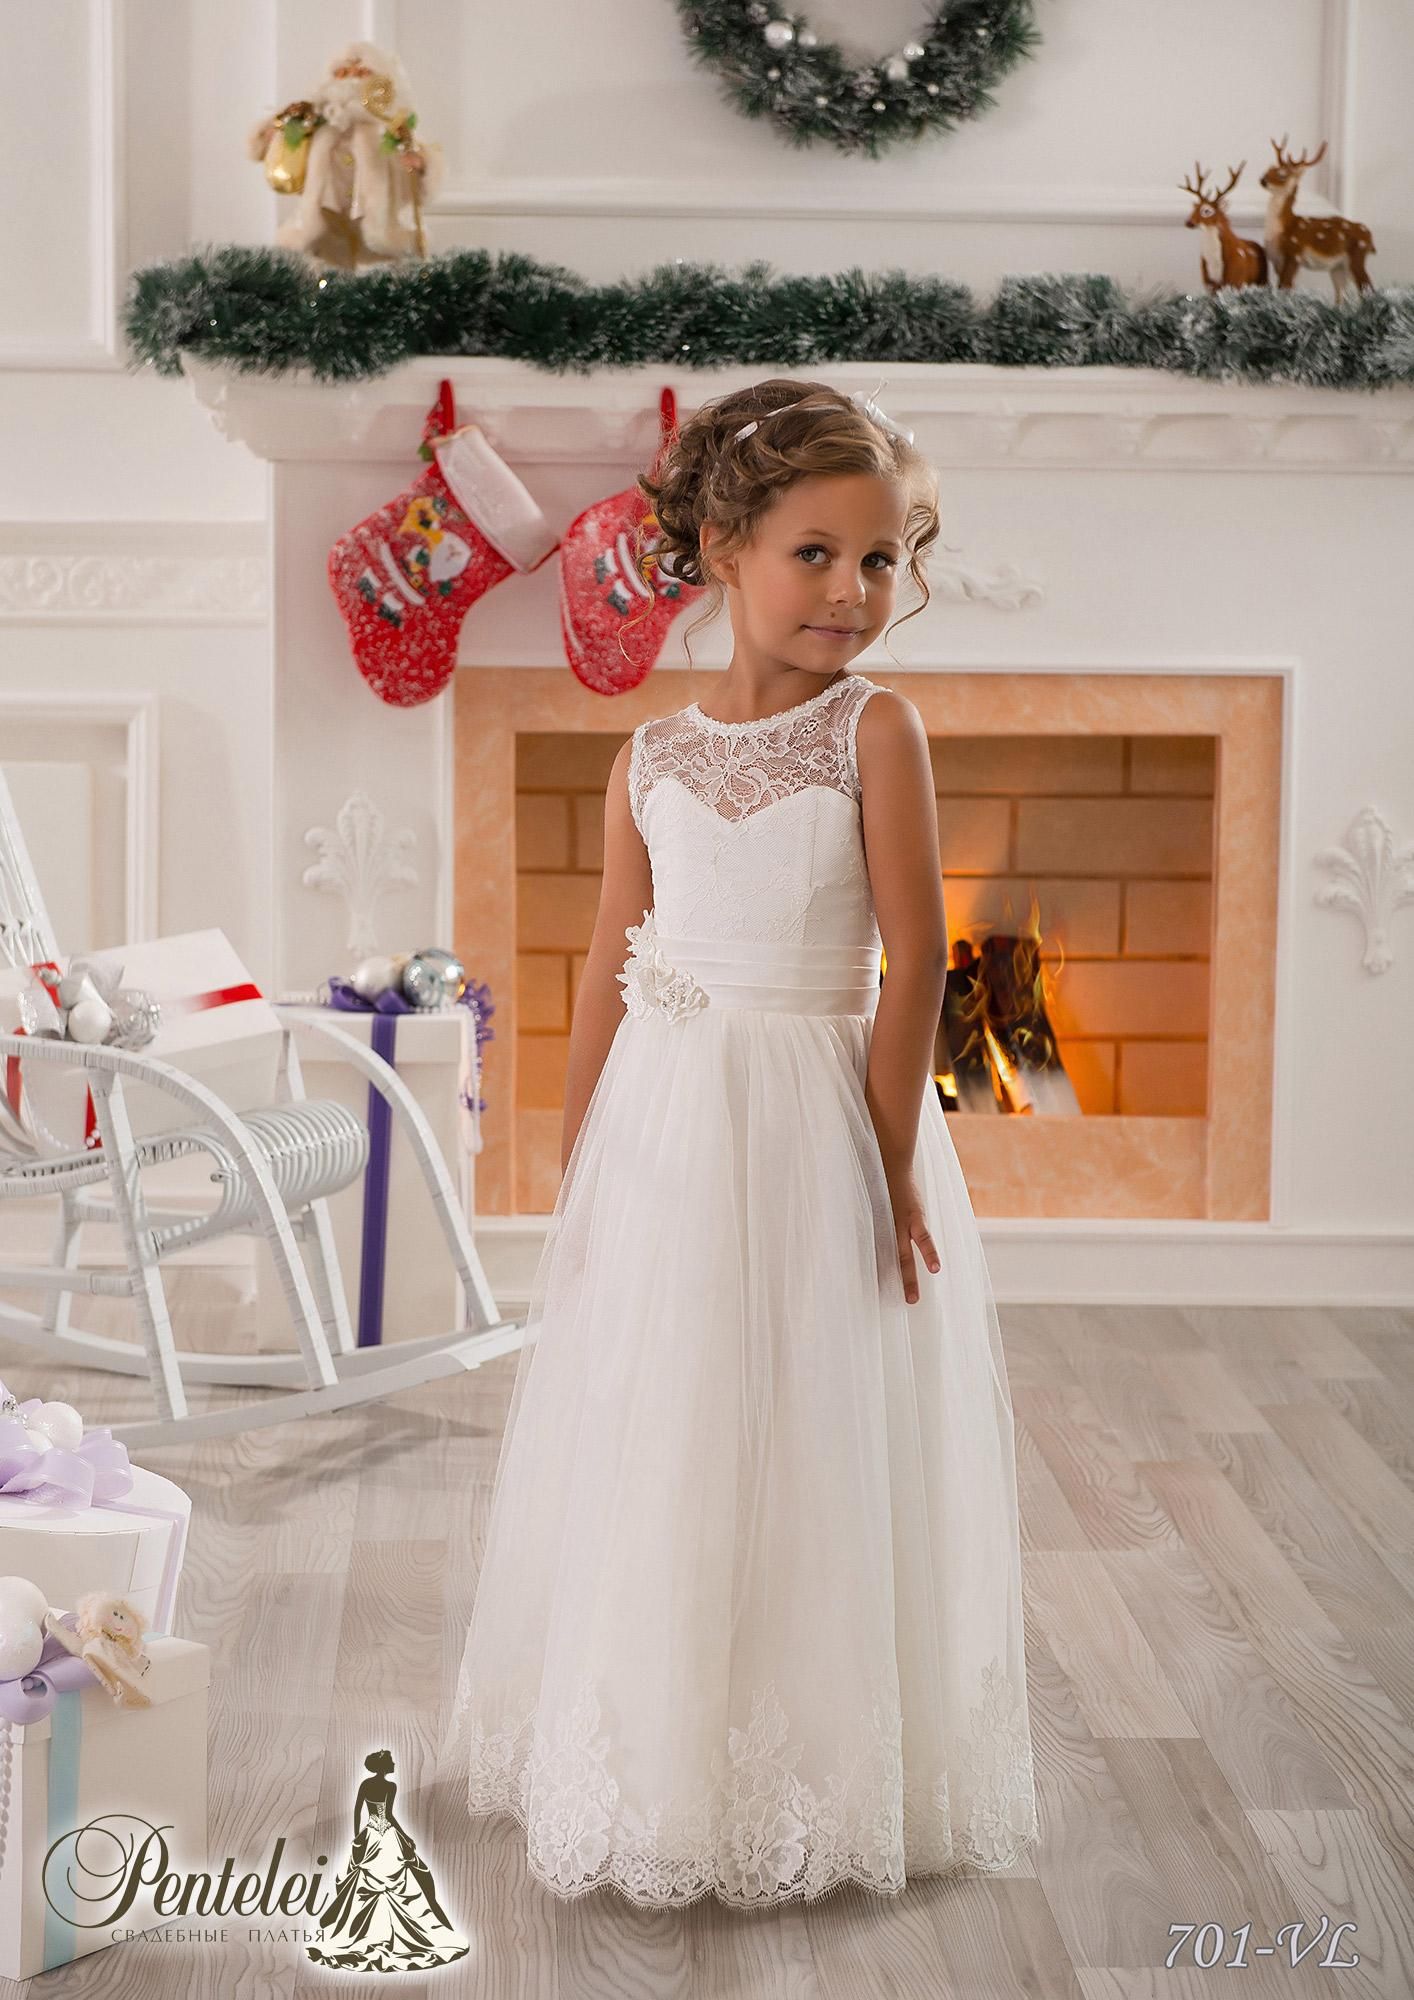 Wholesale Kids Wedding Dresses - Buy Cheap Kids Wedding Dresses ...